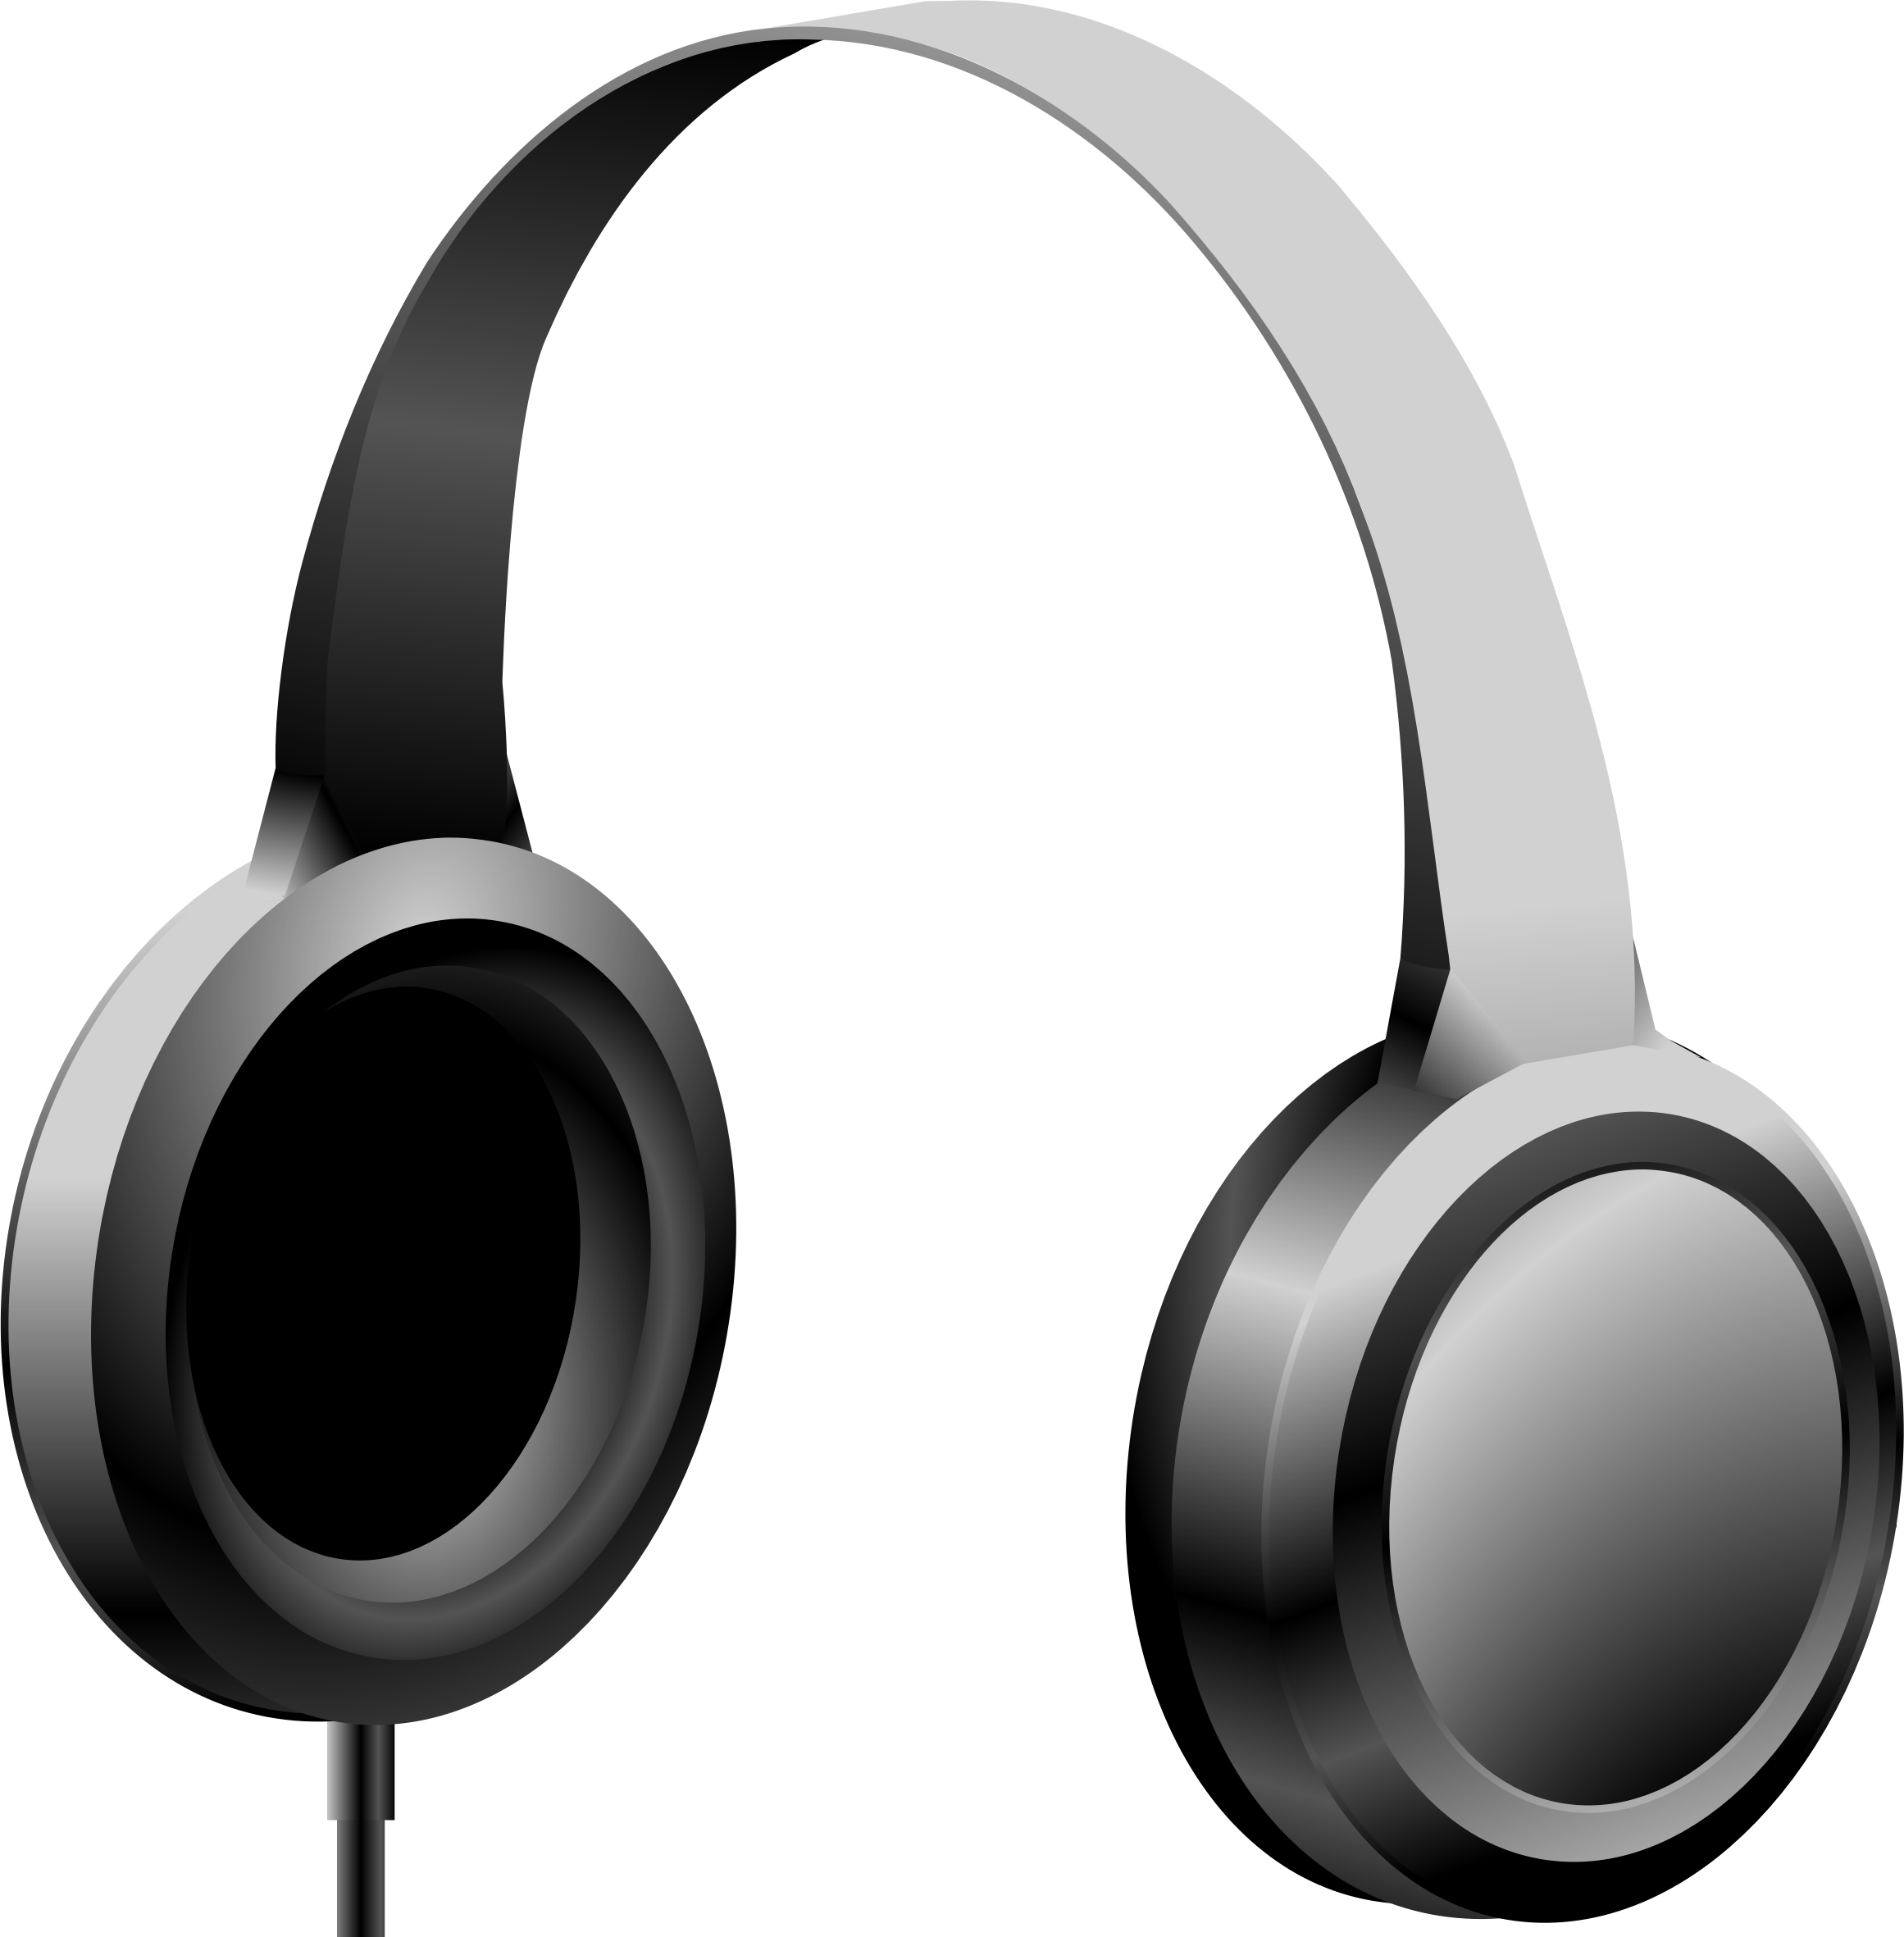 This Free Icons Png Design Of Headphones, Ausinä S - Headphones Transparent Background (2322x2362)